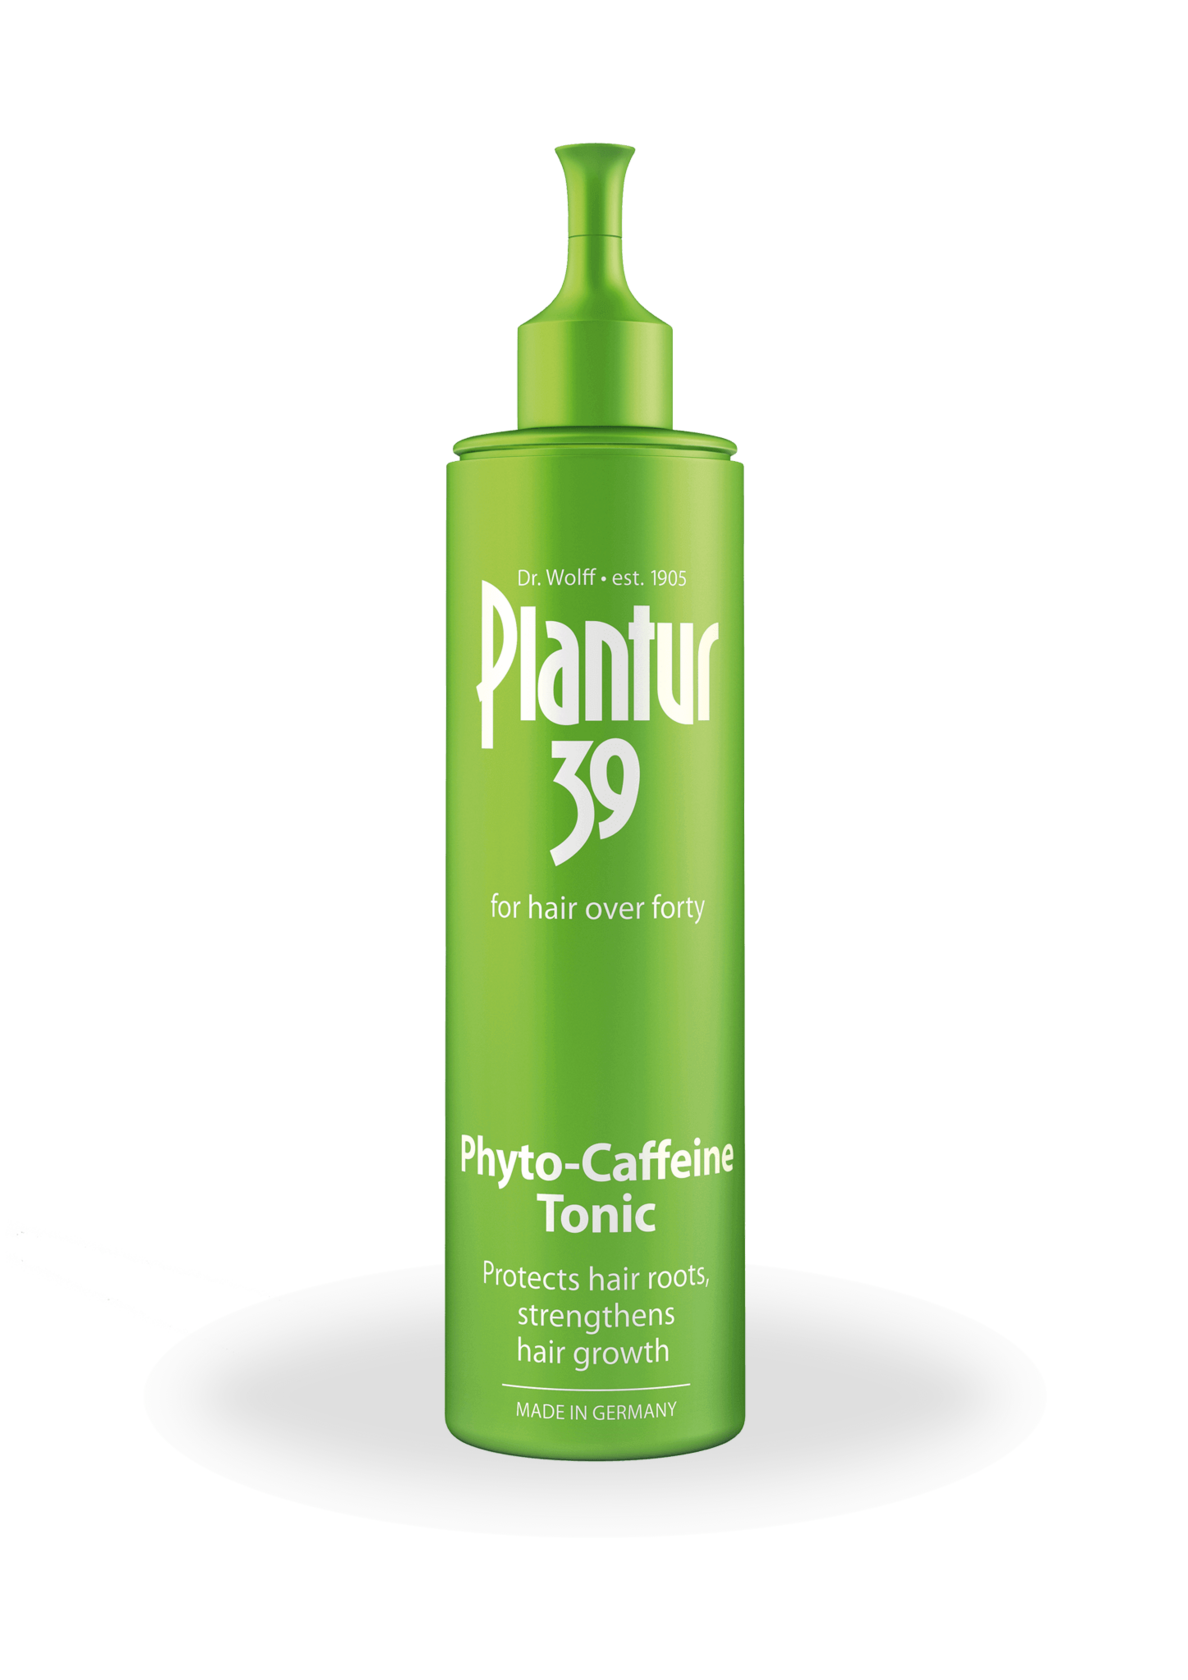 Plantur 39 Phyto-Caffeine Tonic untuk mencegah kerontokan rambut selama  menopause